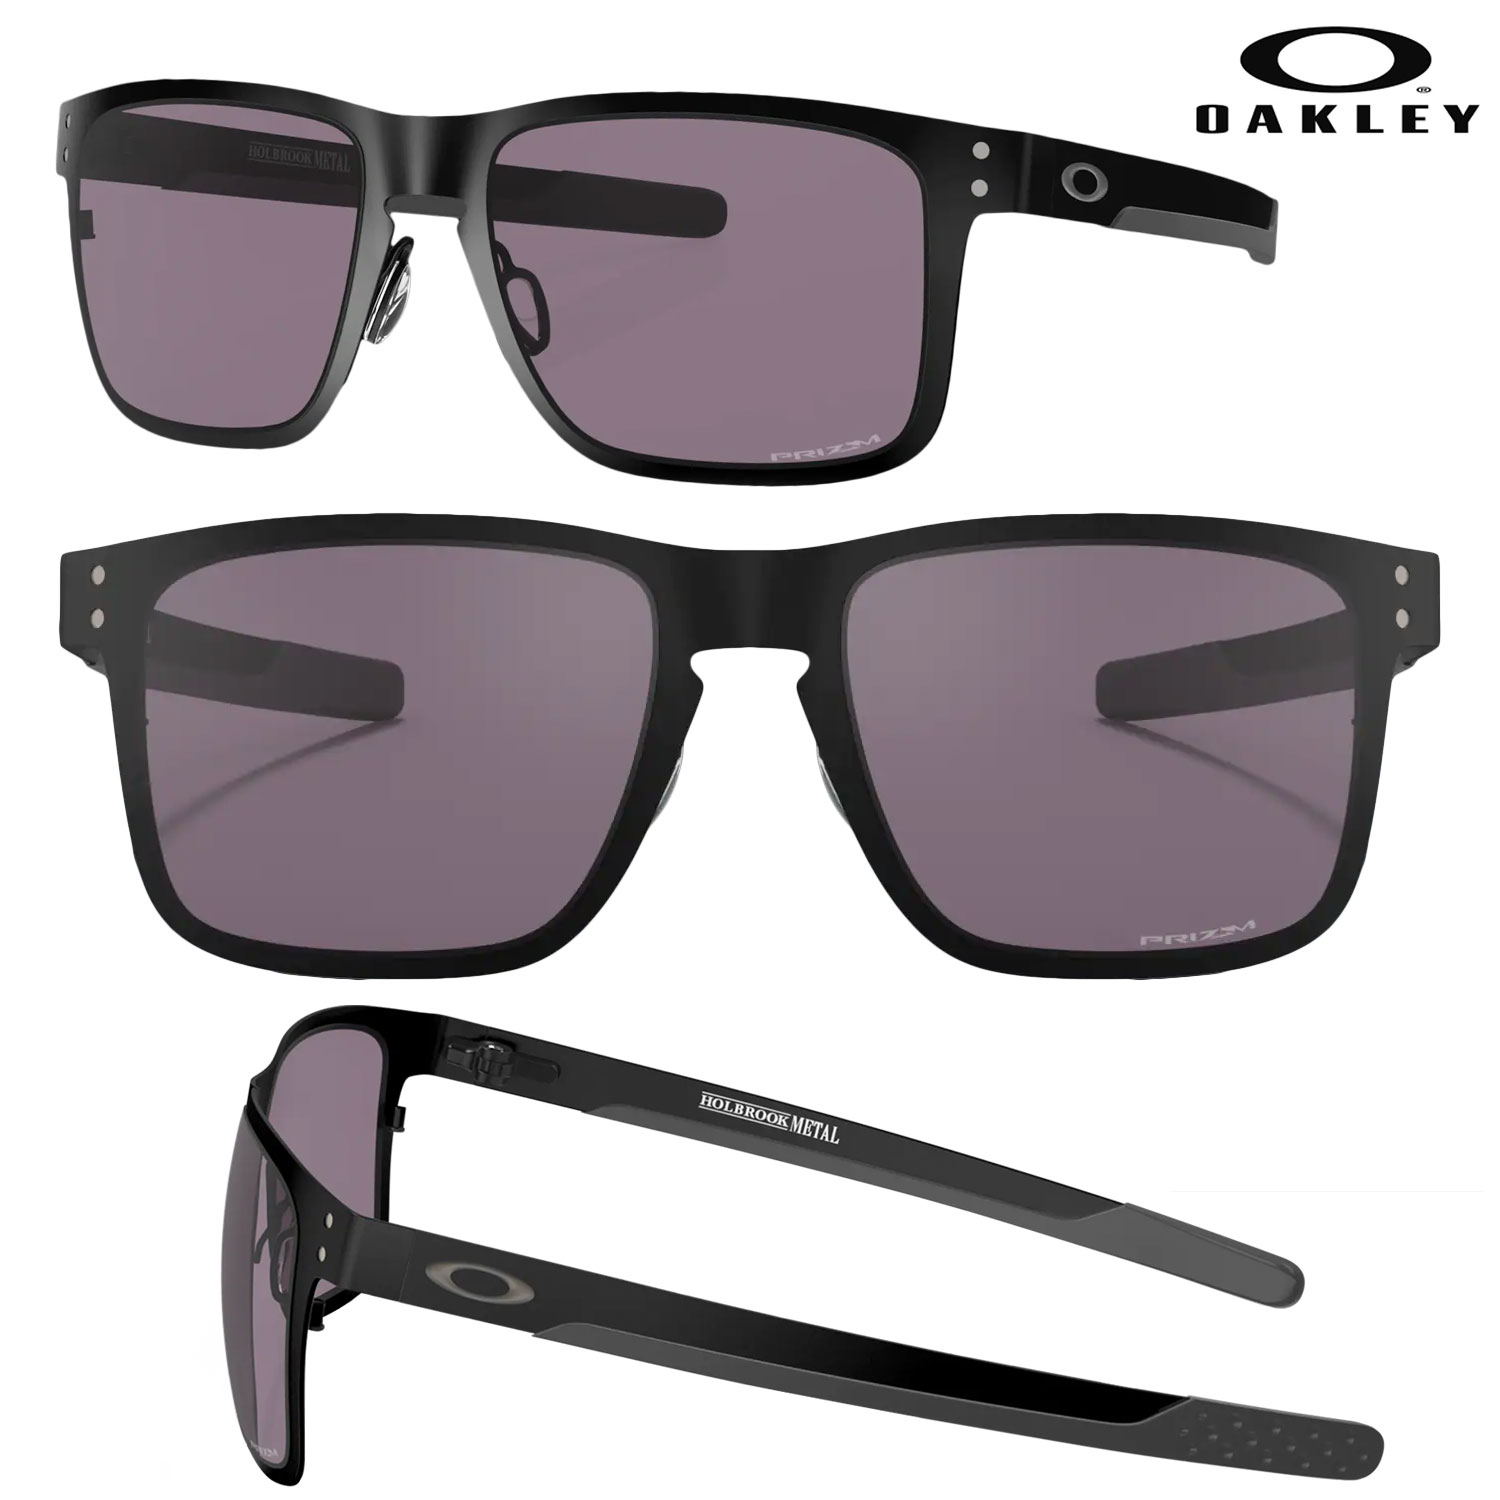 Oakley Holbrook Metal Sunglasses | Field Supply